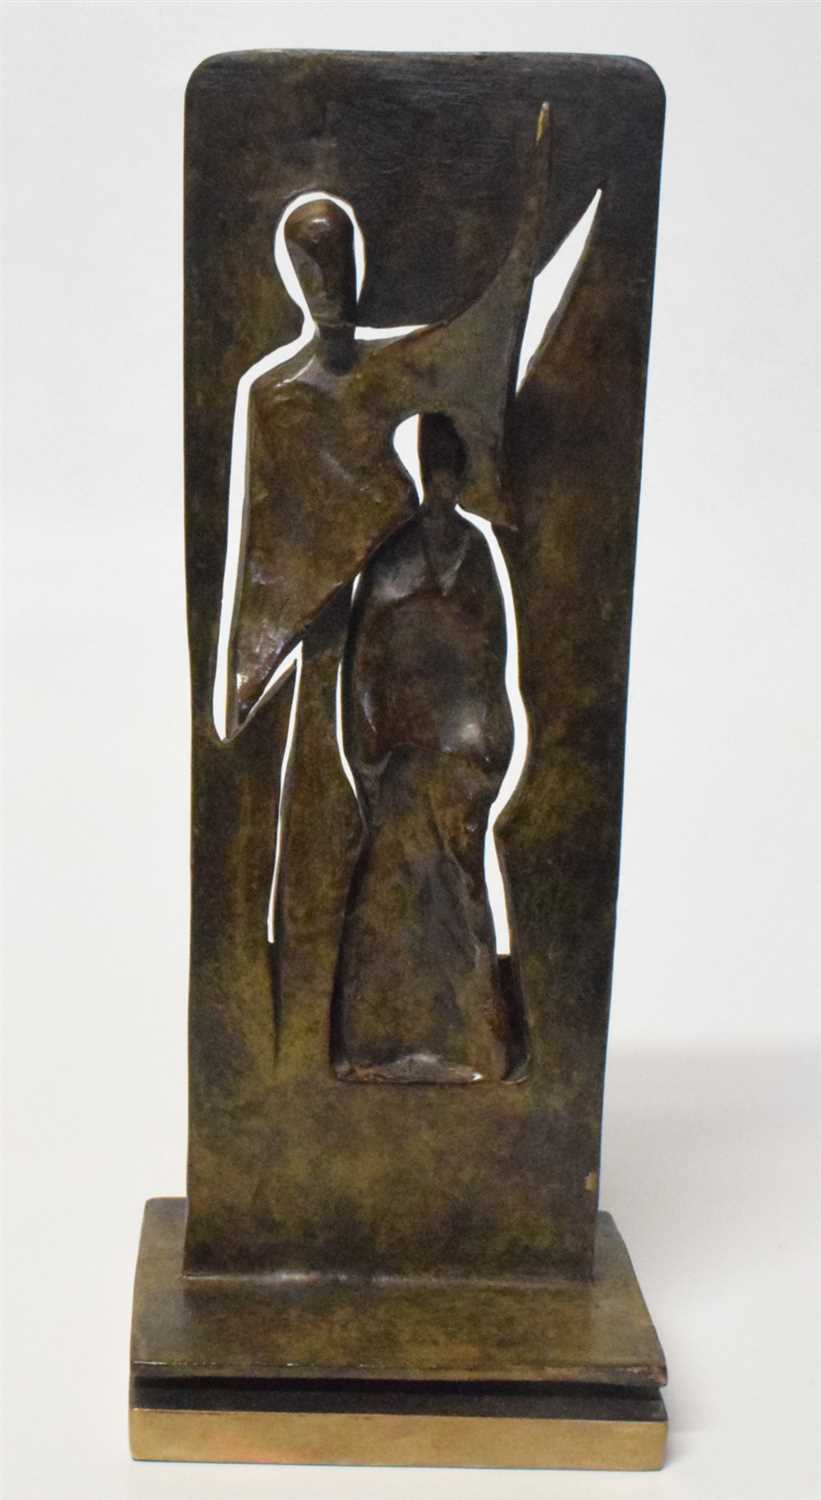 Lot 282 - Joseph Sloan, "Onstage", bronze sculpture.